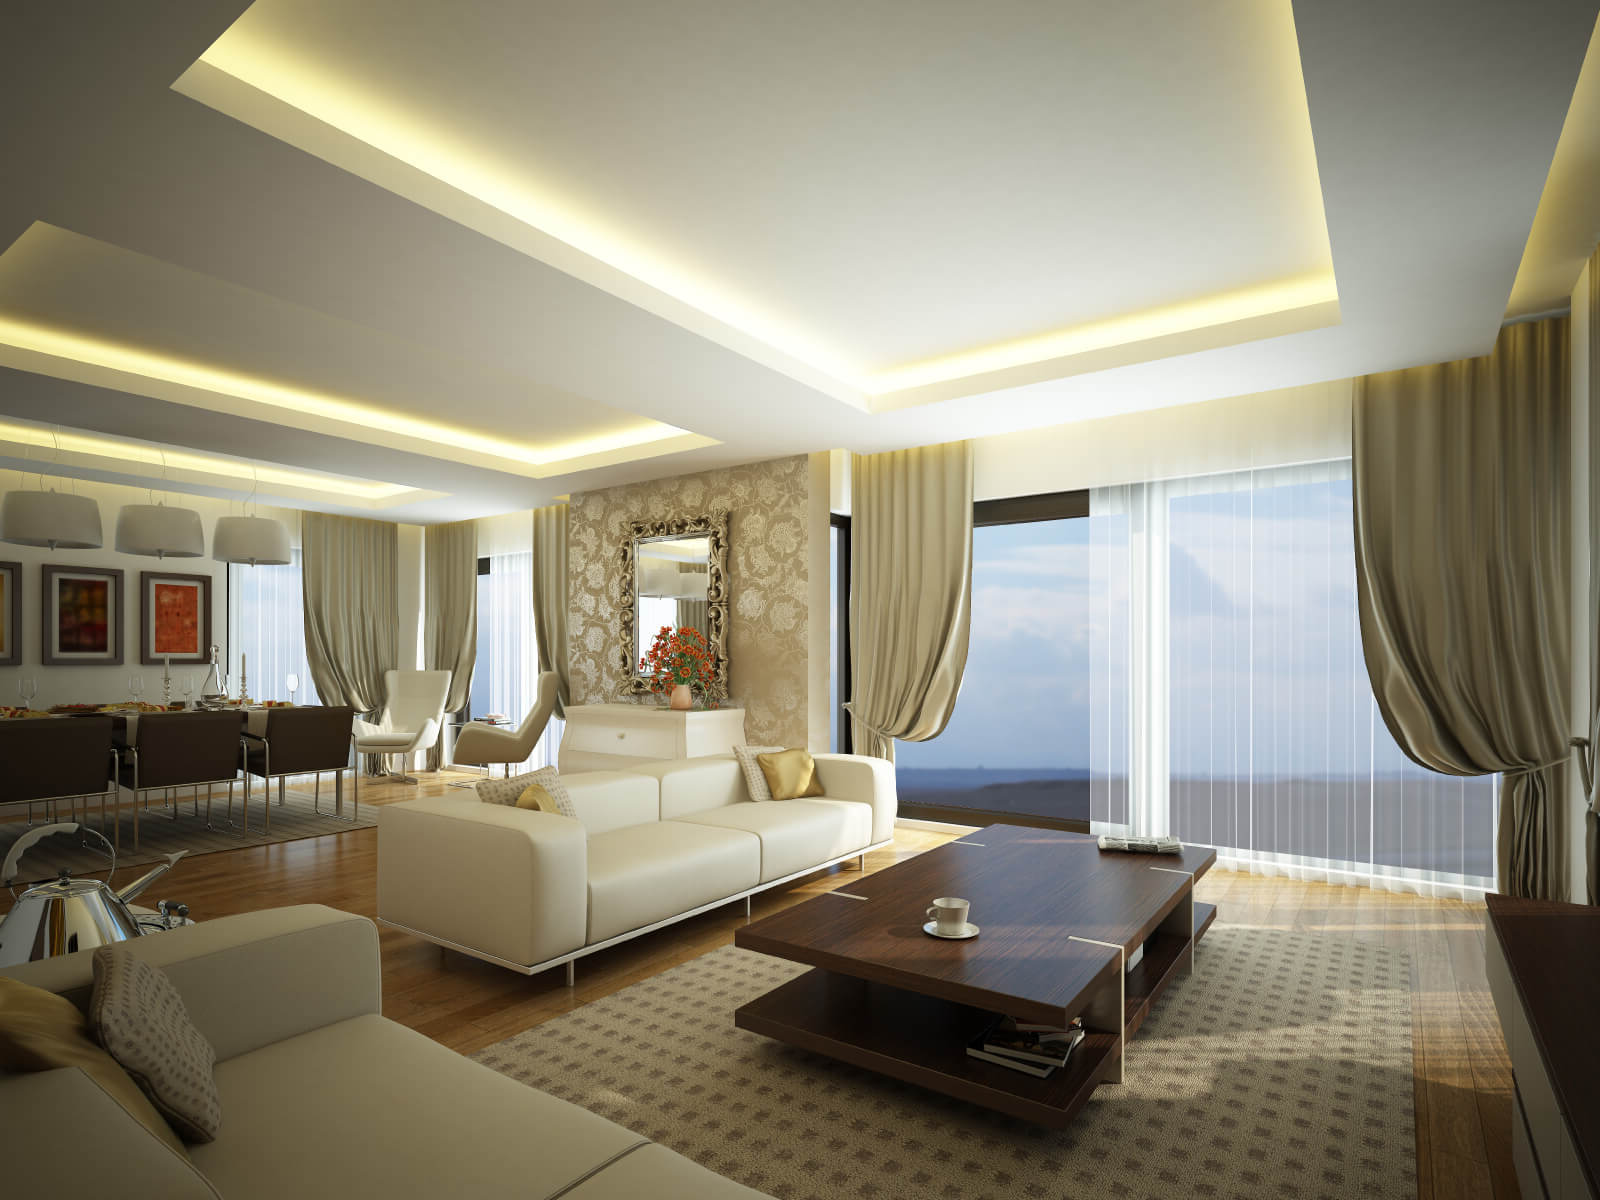 Living Room Lighting Ideas on a Budget | Roy Home Design